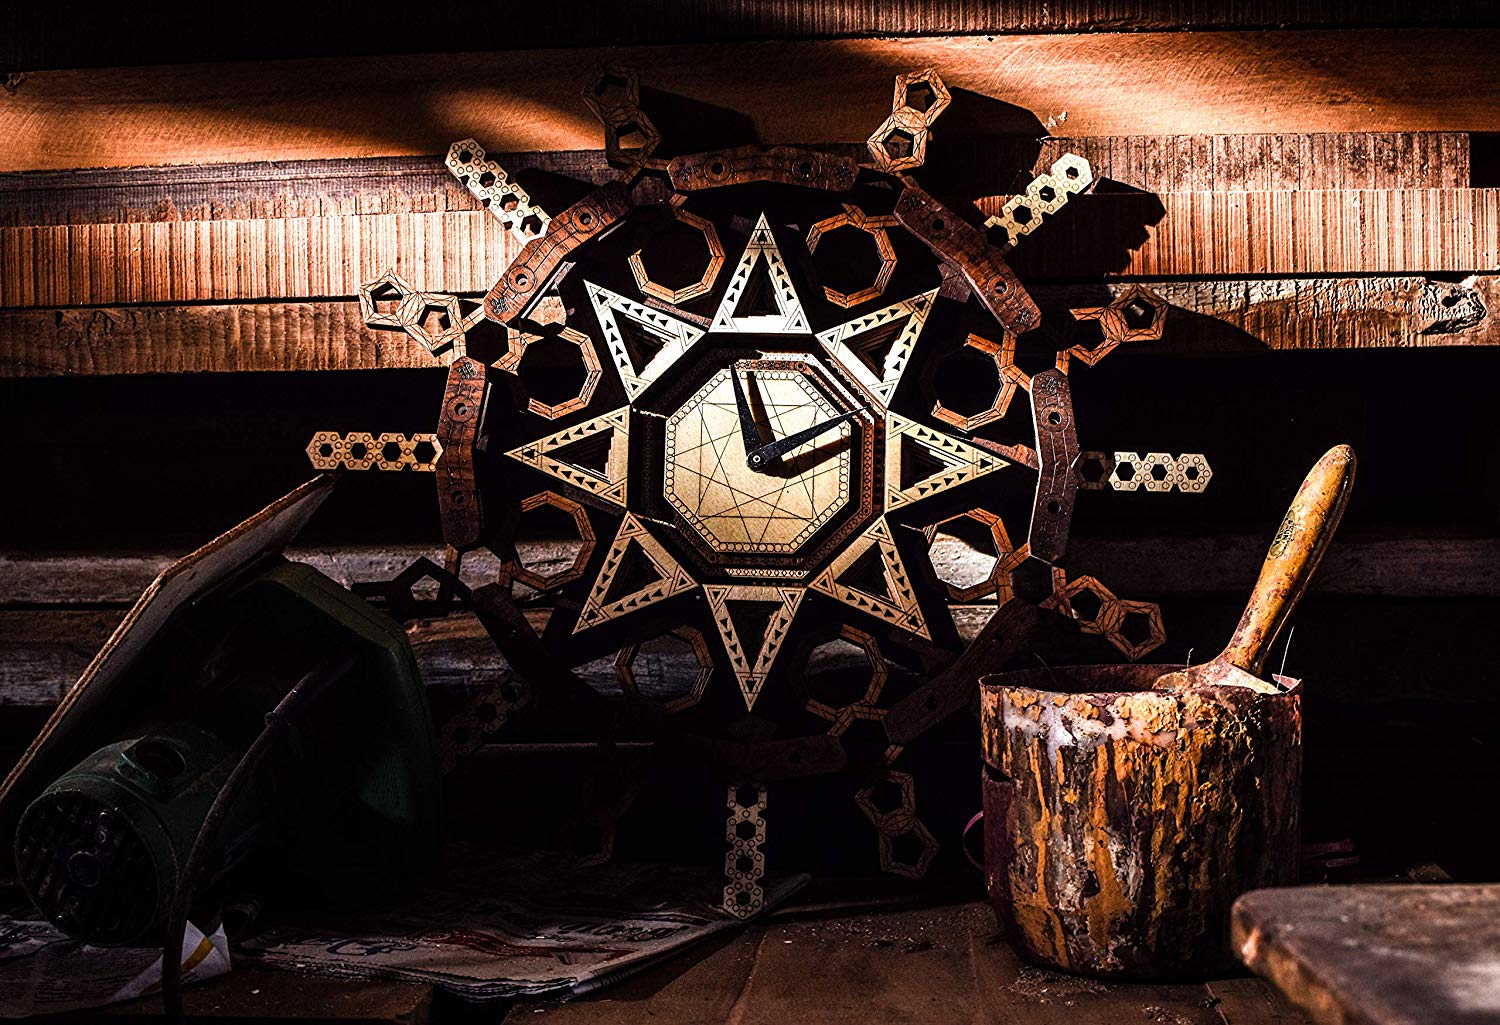 Sacred Geometry - Qreative Qick Wooden Wall Clock | Sacred Vintage Clocks | Mandala Clock